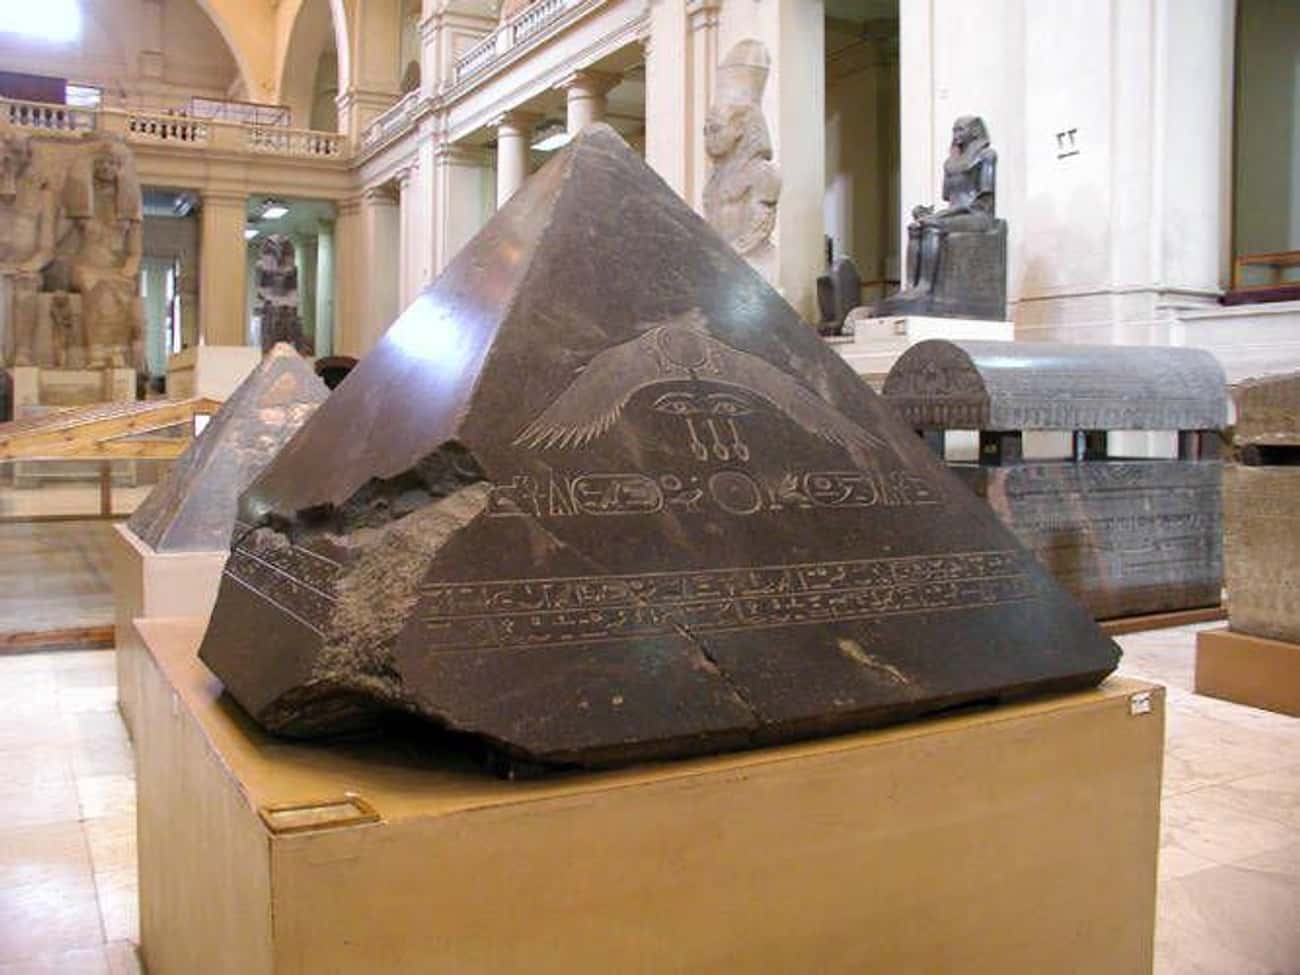 The Pyramidion Of The Black Pyramid Of Dashur (c. 1820 BC)